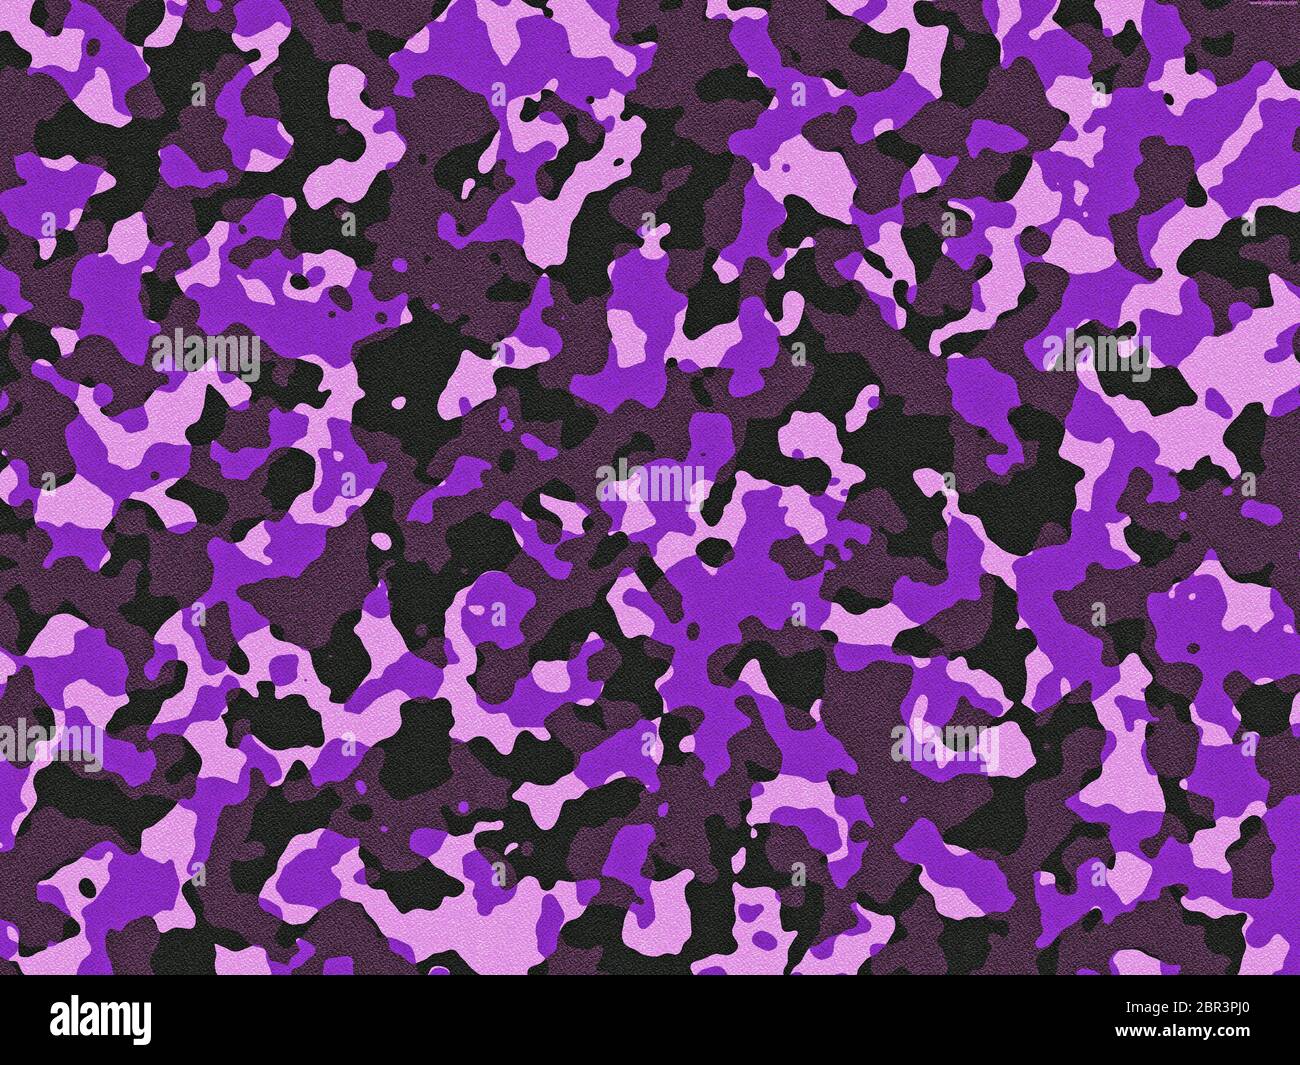 Textured purple camouflage pattern Stock Photo - Alamy